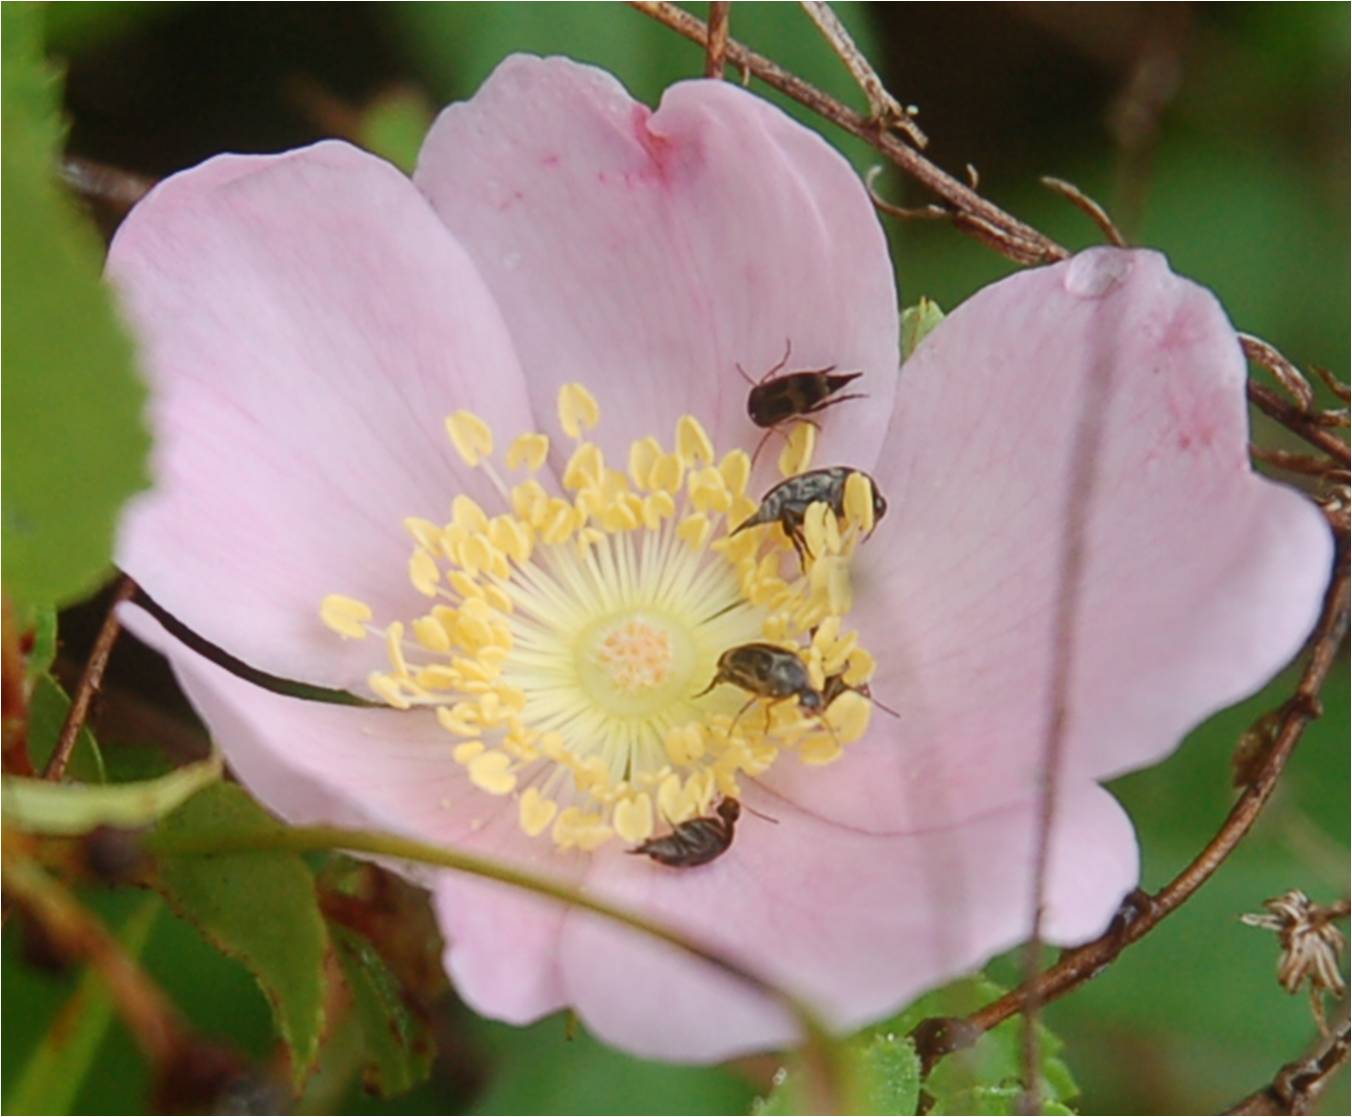 Carolina rose with Tumbling Flower beetles at ECWA's Glennstone preserve